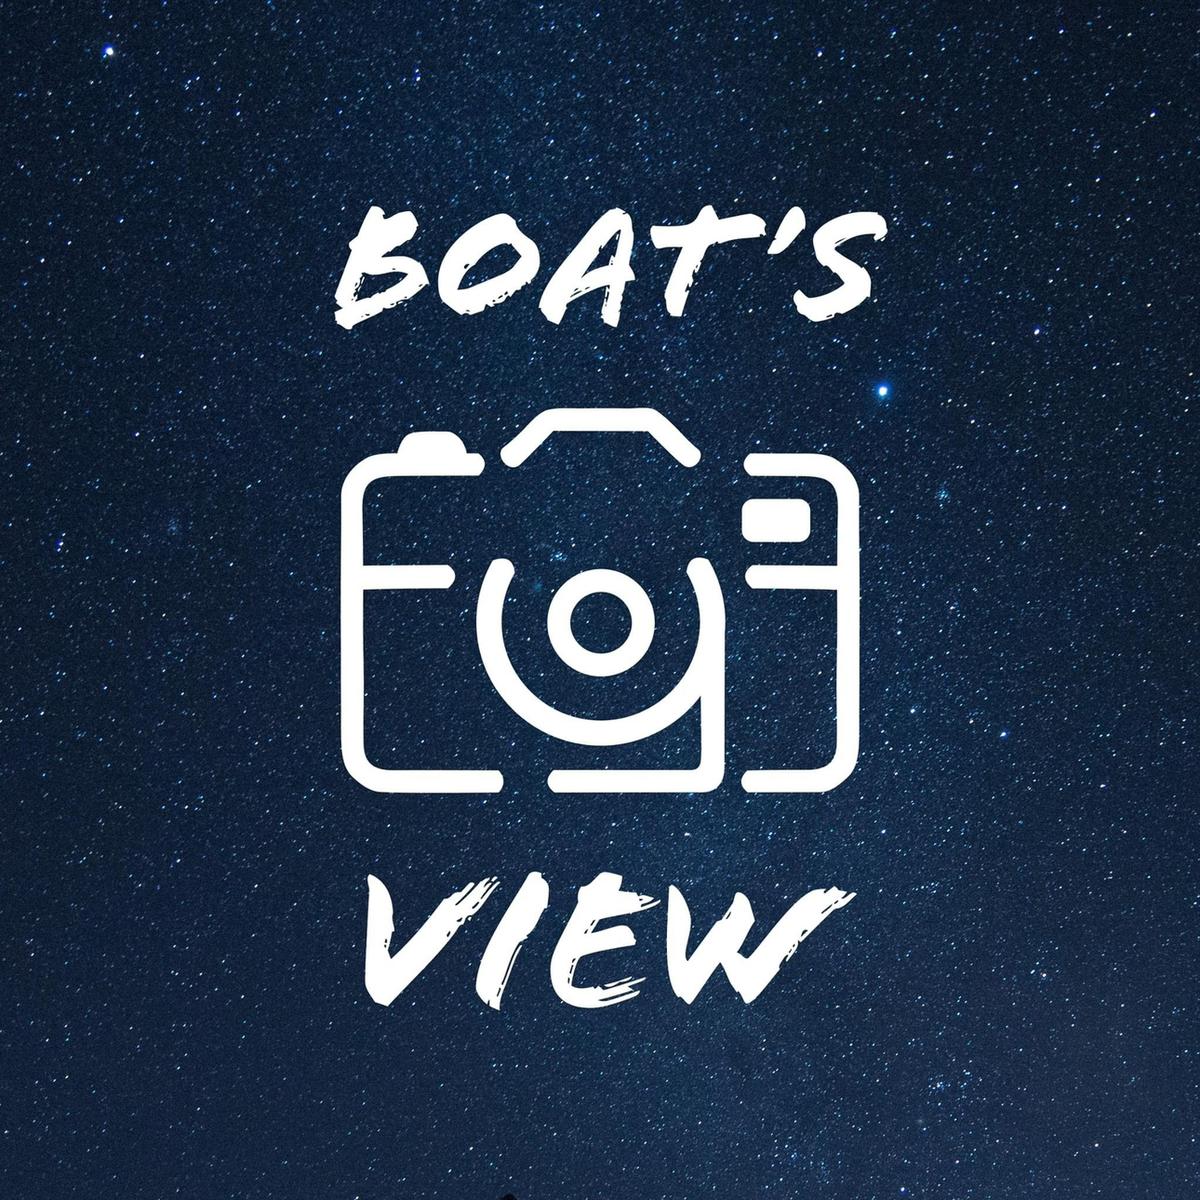 Boat’s eye view